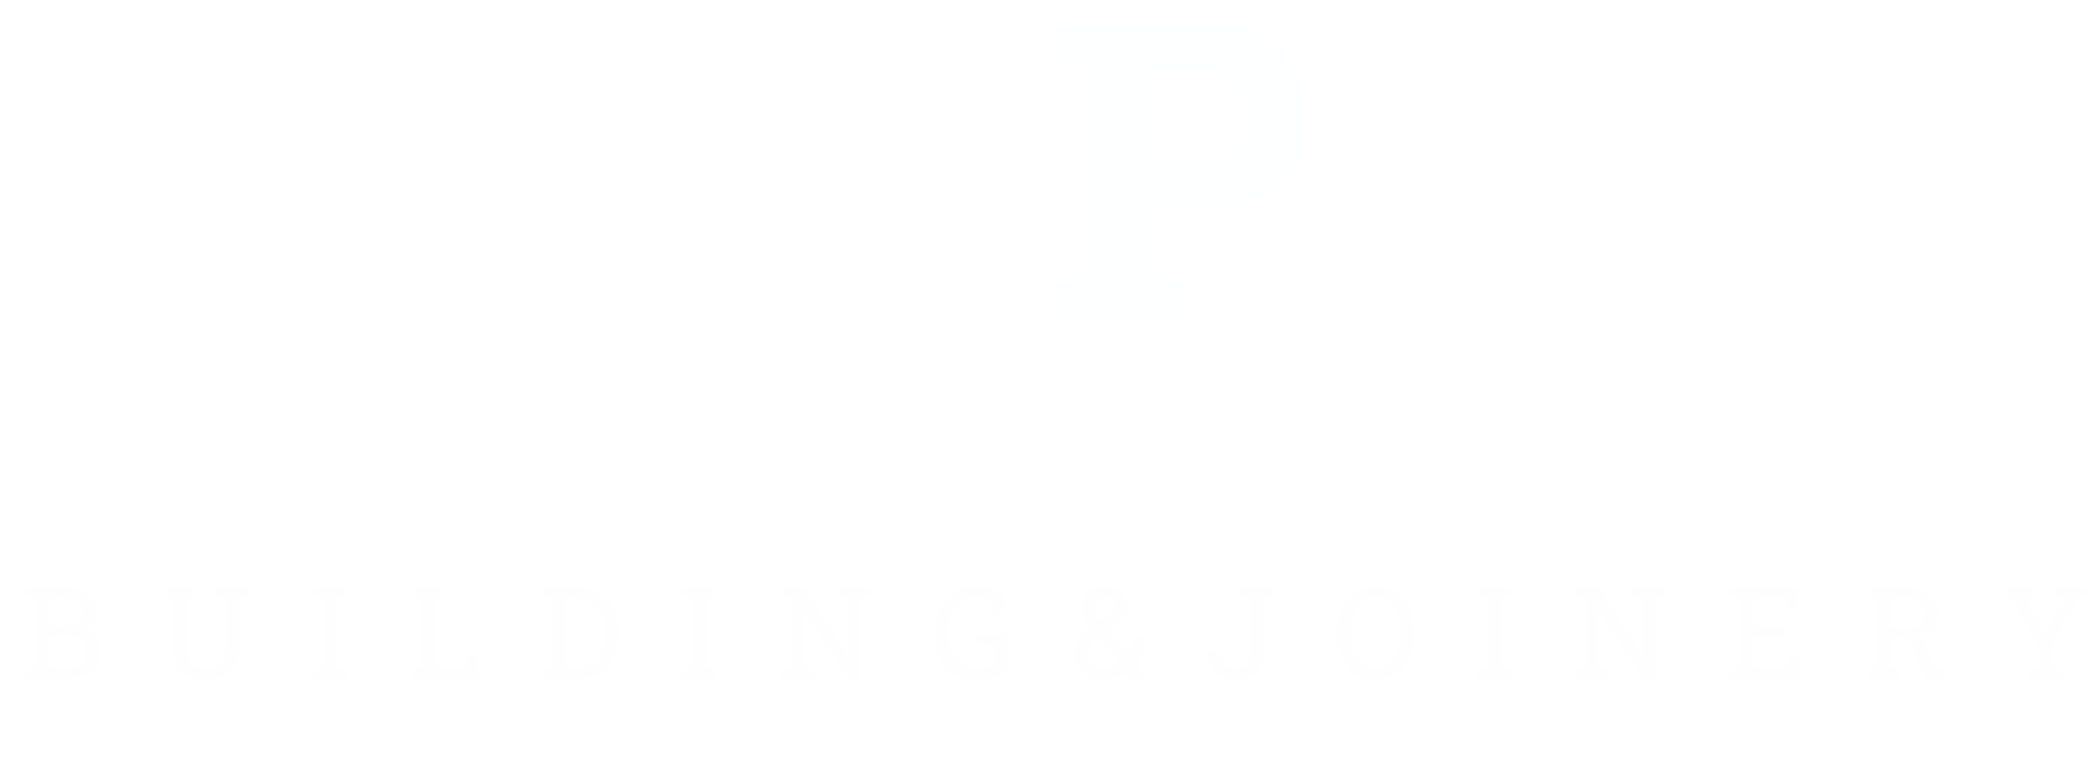 Pettigrew Builders Ltd Logo